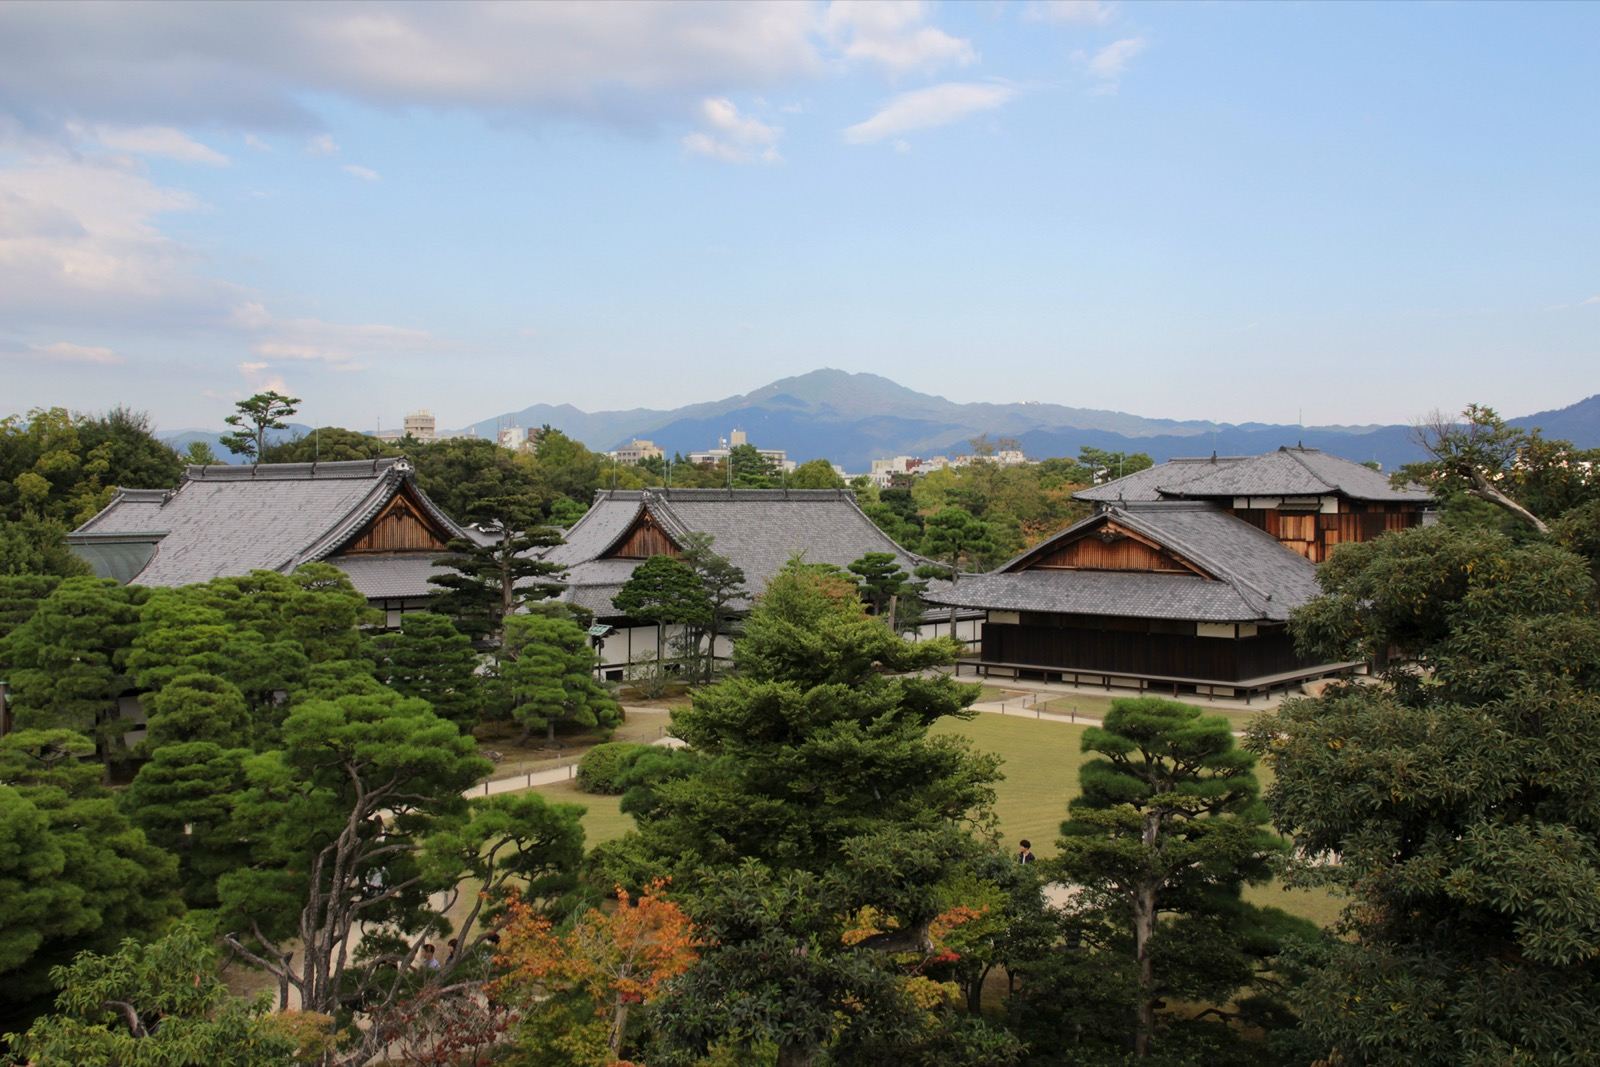 Photo of Nijo Castle, Japan (Nijō castle, Kyoto by DavideGorla)